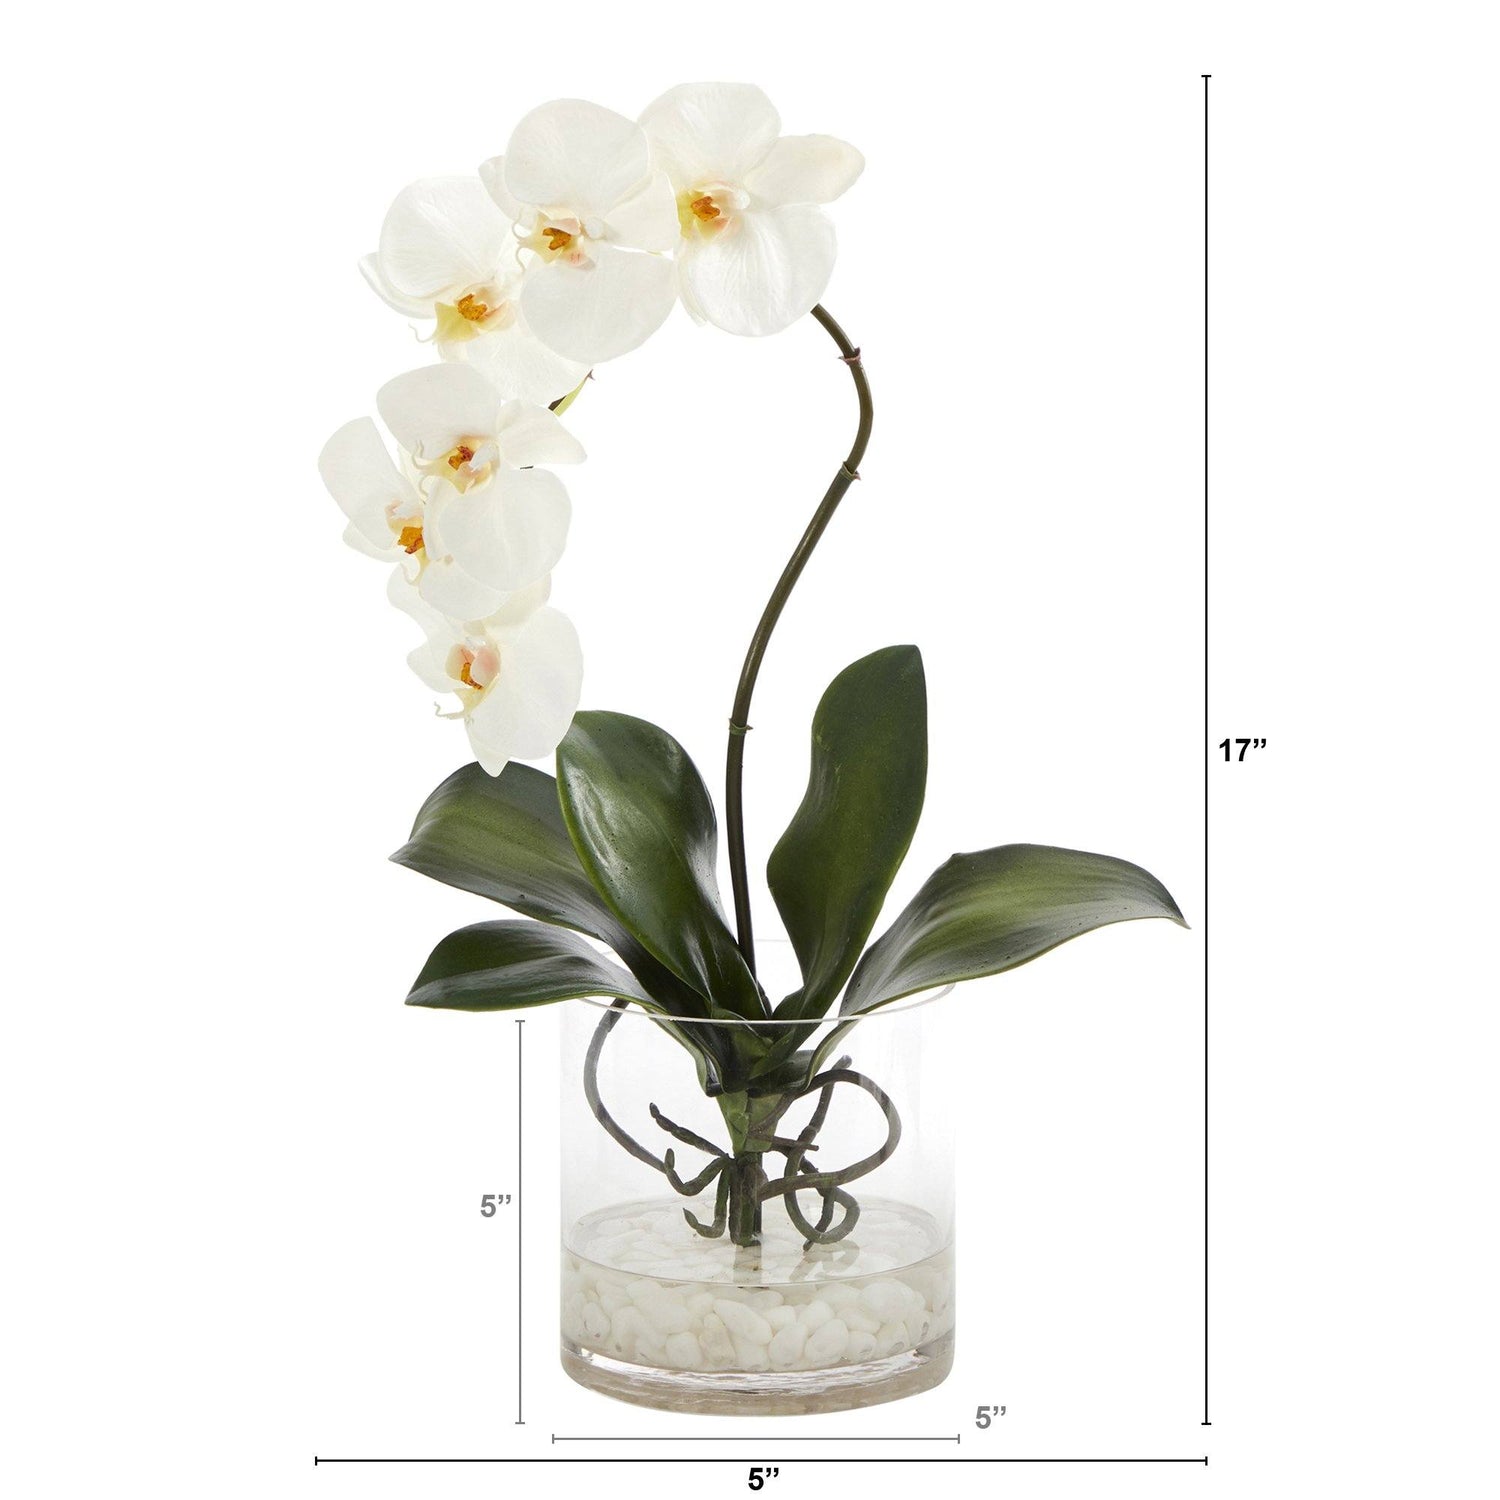 17” Phalaenopsis Orchid Artificial Arrangement in Glass Vase